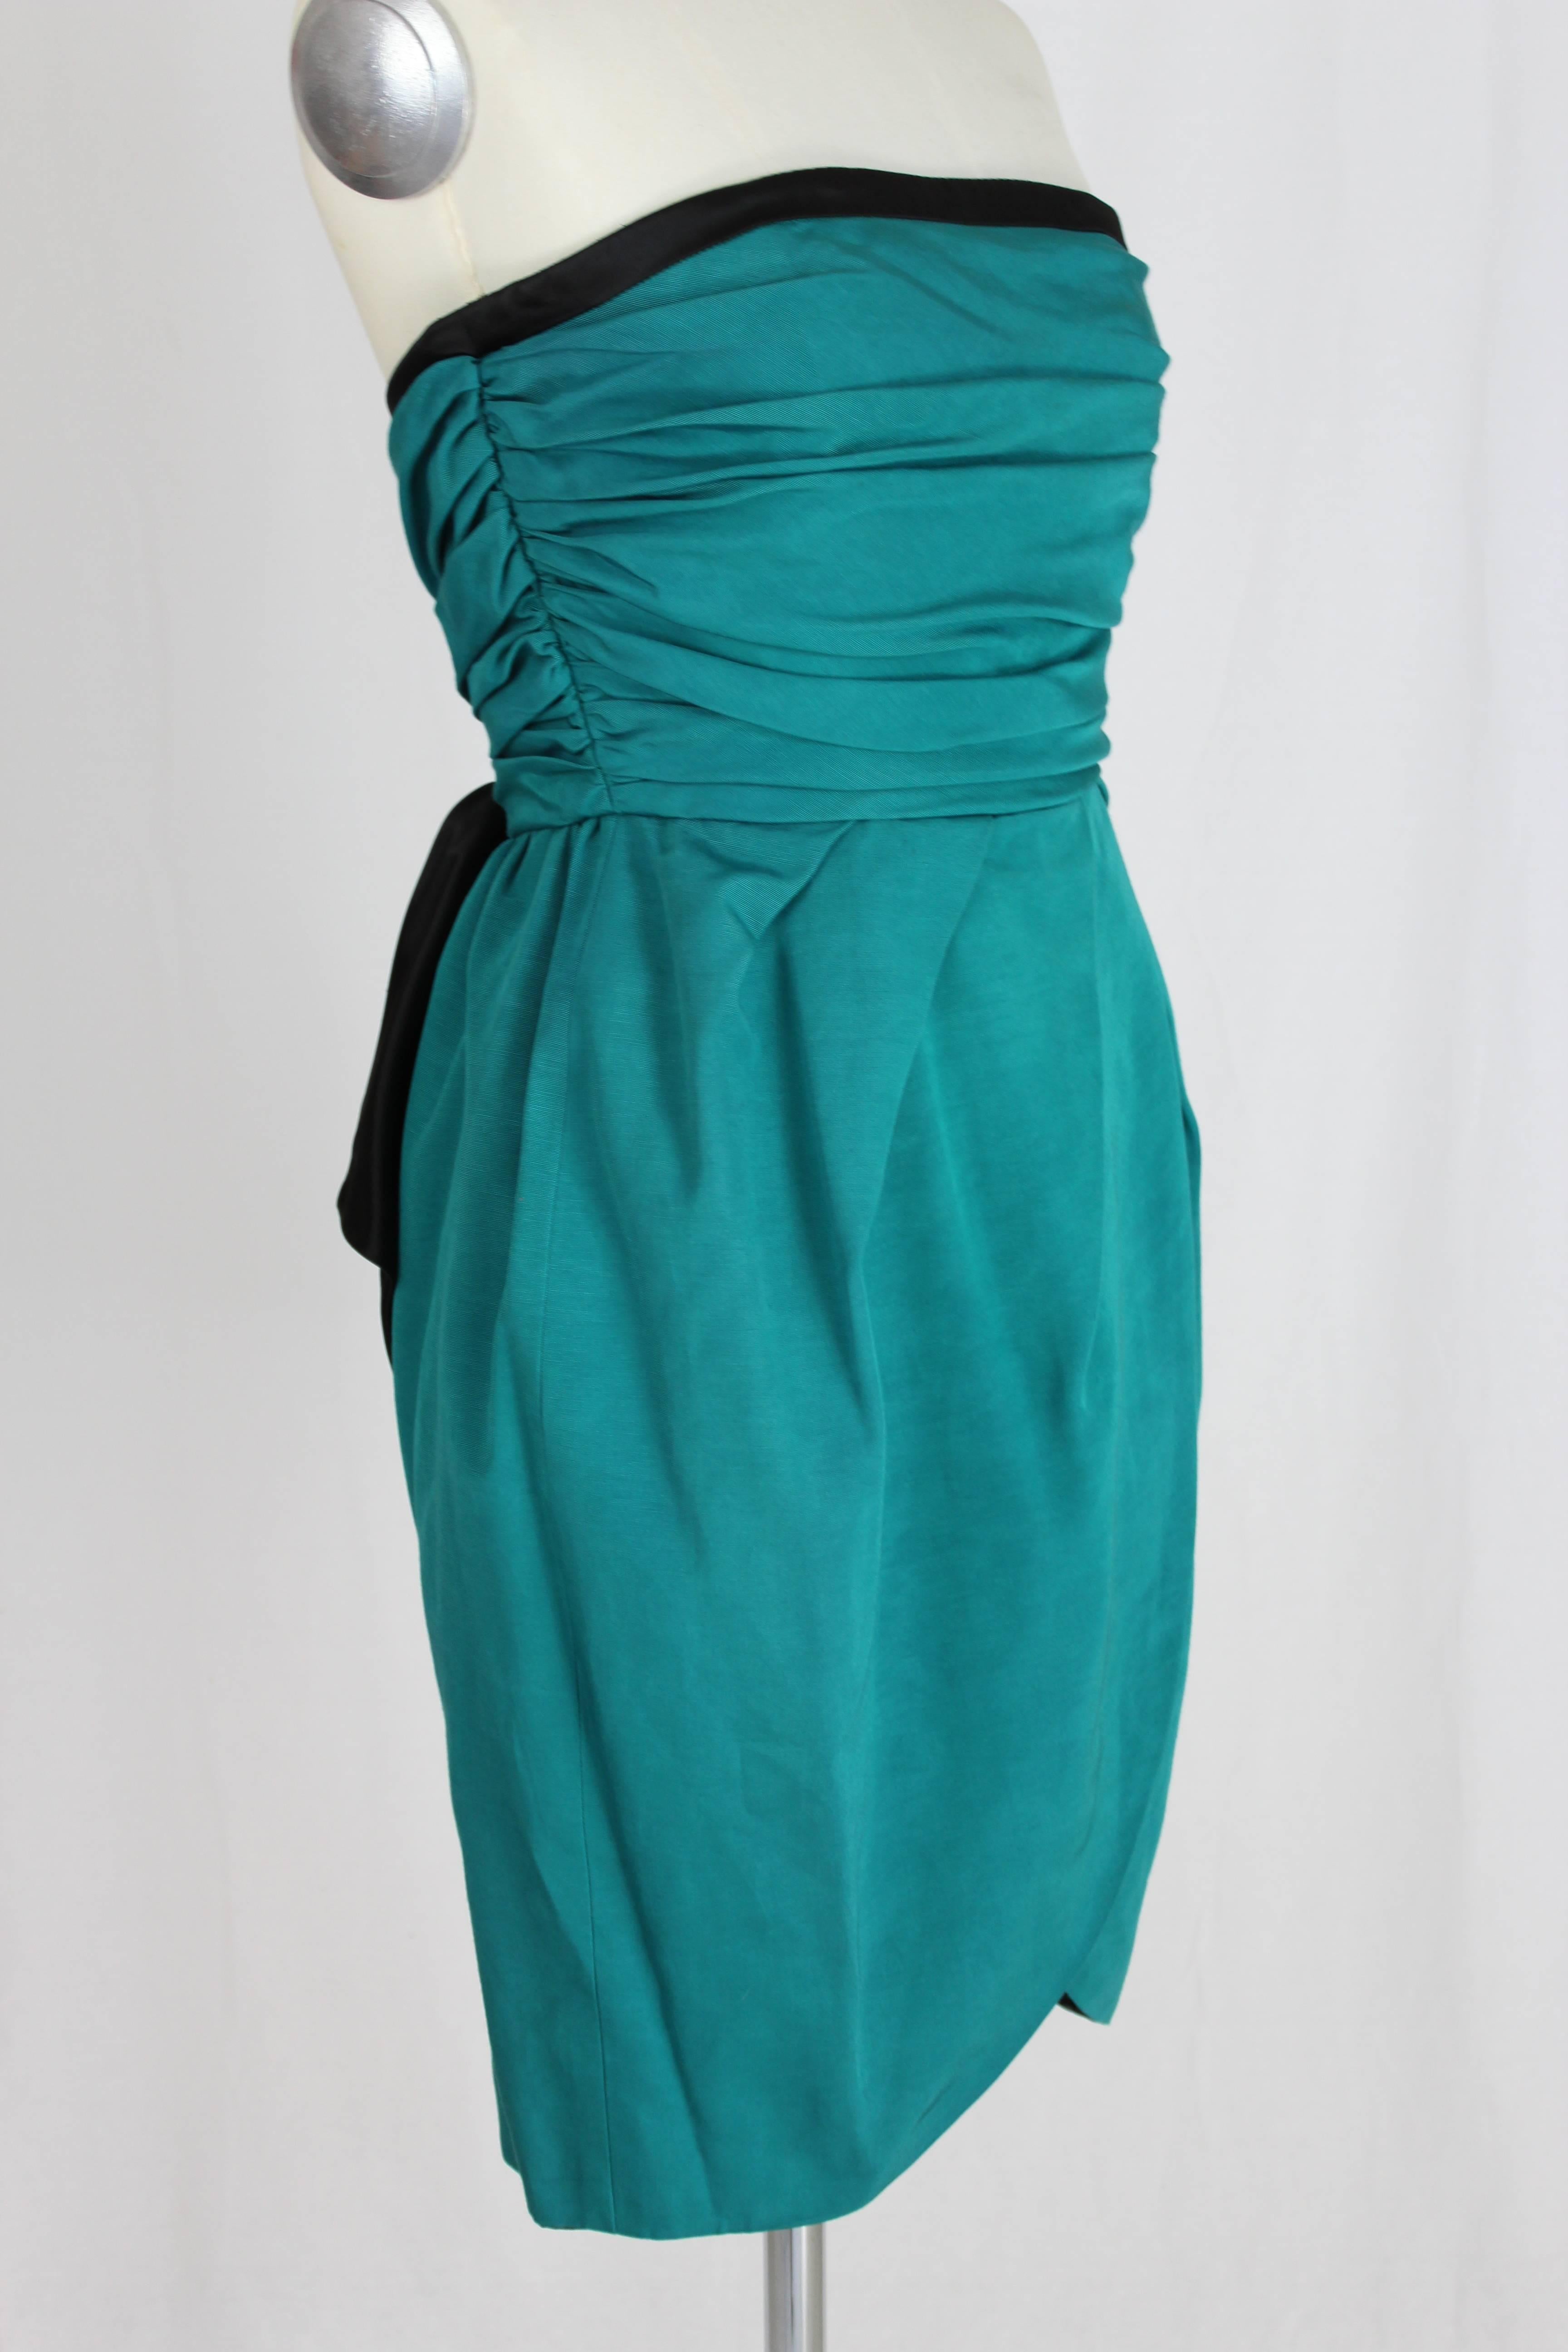 Women's 1980s Christian Dior Green Emerald Sheath Dress